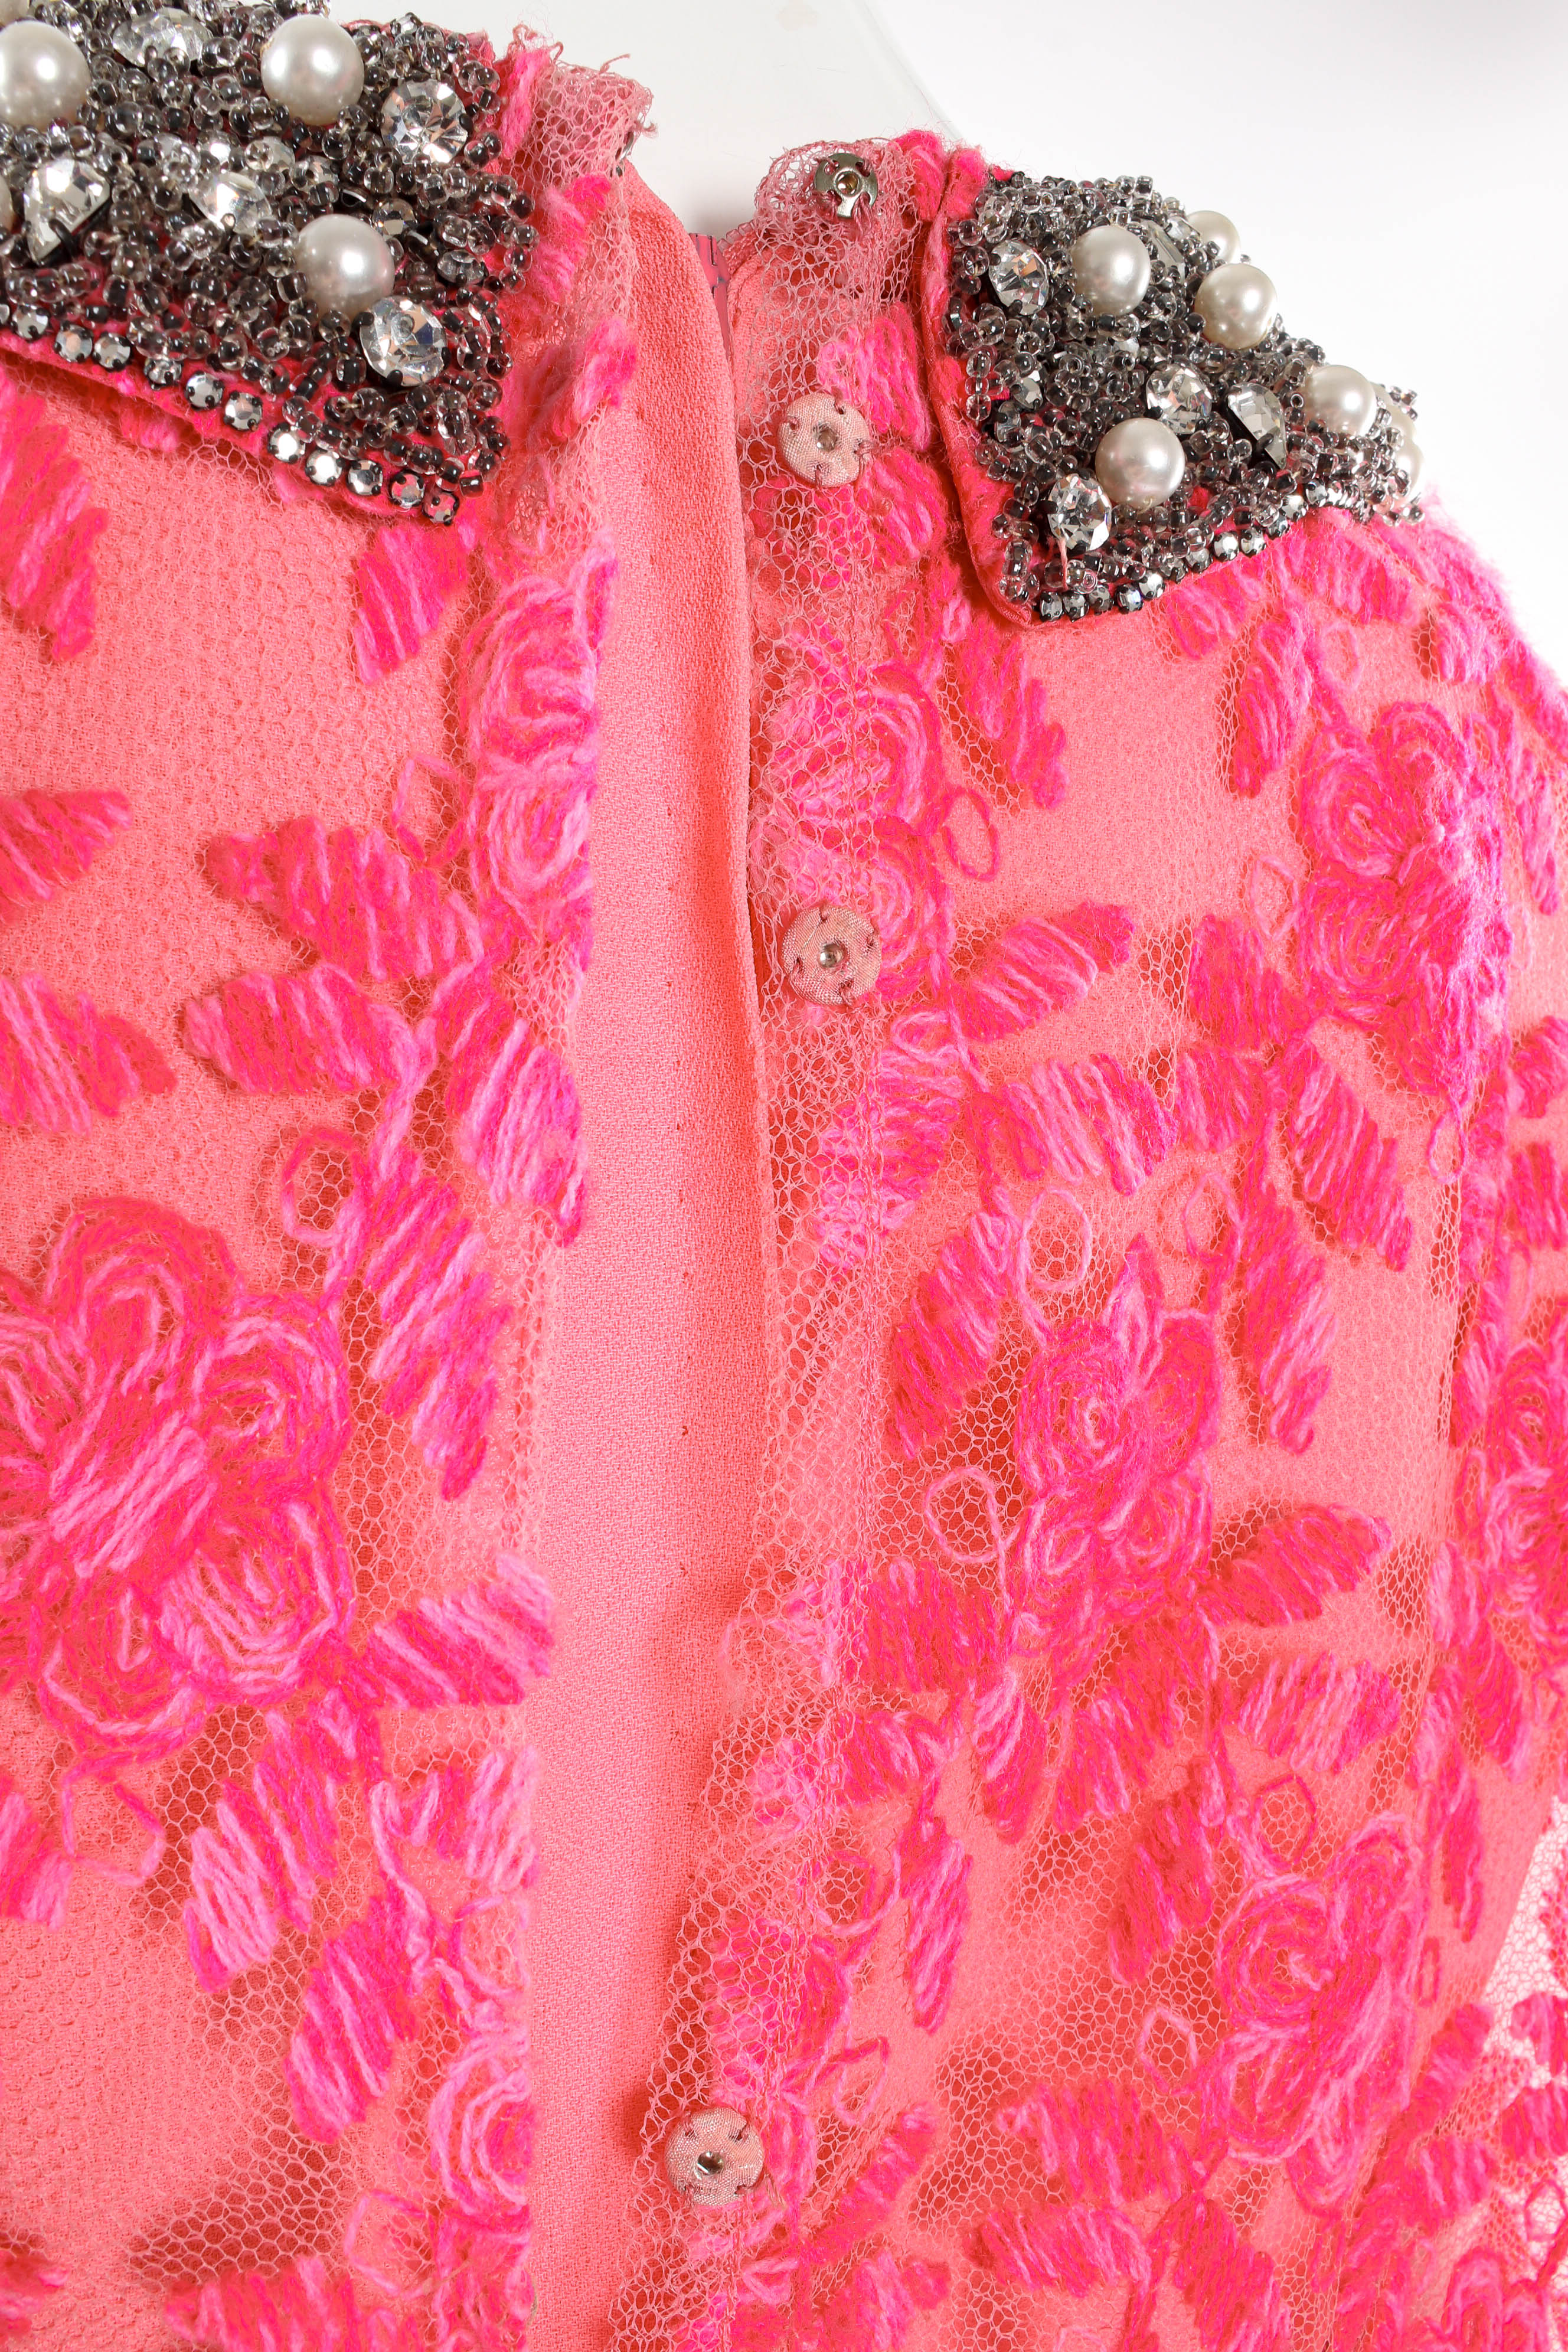 Vintage Mr. Blackwell Yarn Floral Lace Dress back collar/mesh shell detail @ Recess LA